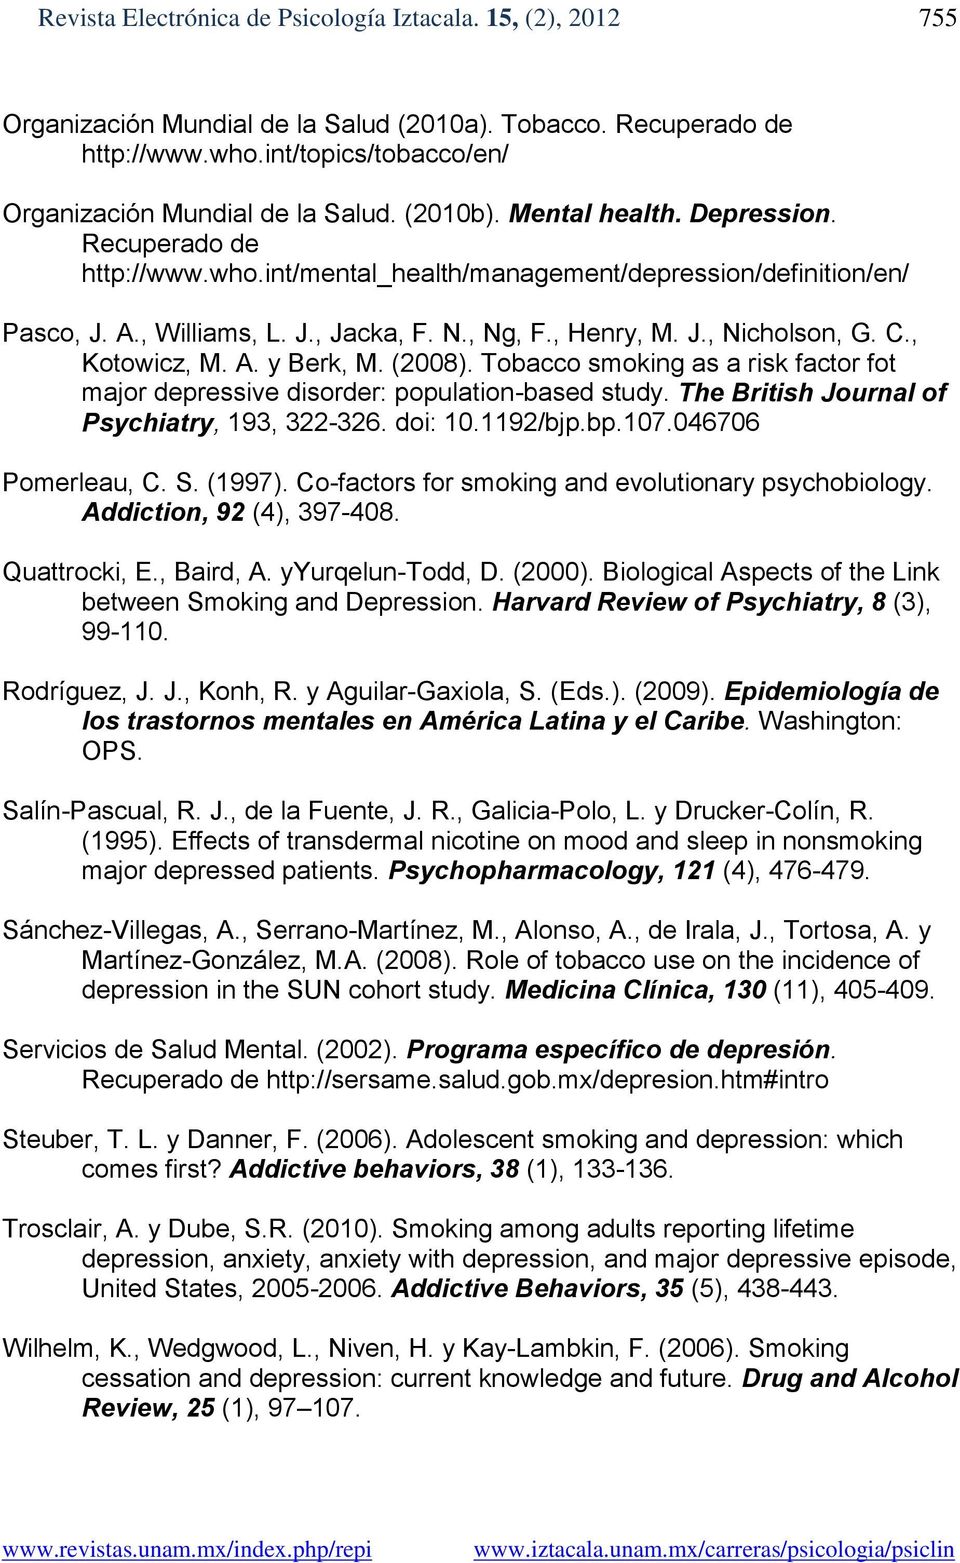 C., Kotowicz, M. A. y Berk, M. (2008). Tobacco smoking as a risk factor fot major depressive disorder: population-based study. The British Journal of Psychiatry, 193, 322-326. doi: 10.1192/bjp.bp.107.